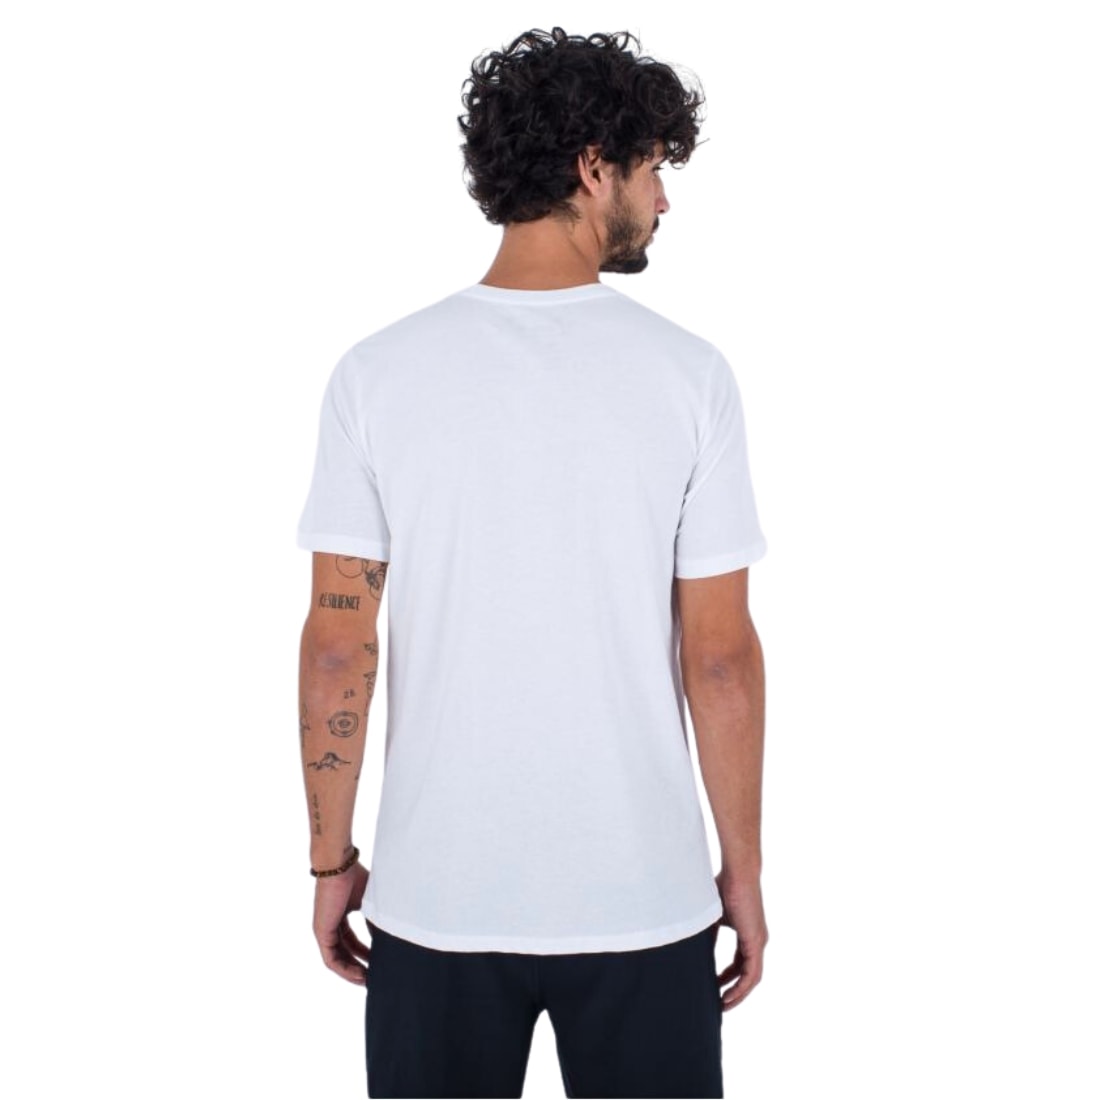 Hurley Everyday Kai Lenny T-Shirt - White - Mens Surf Brand T-Shirt by Hurley